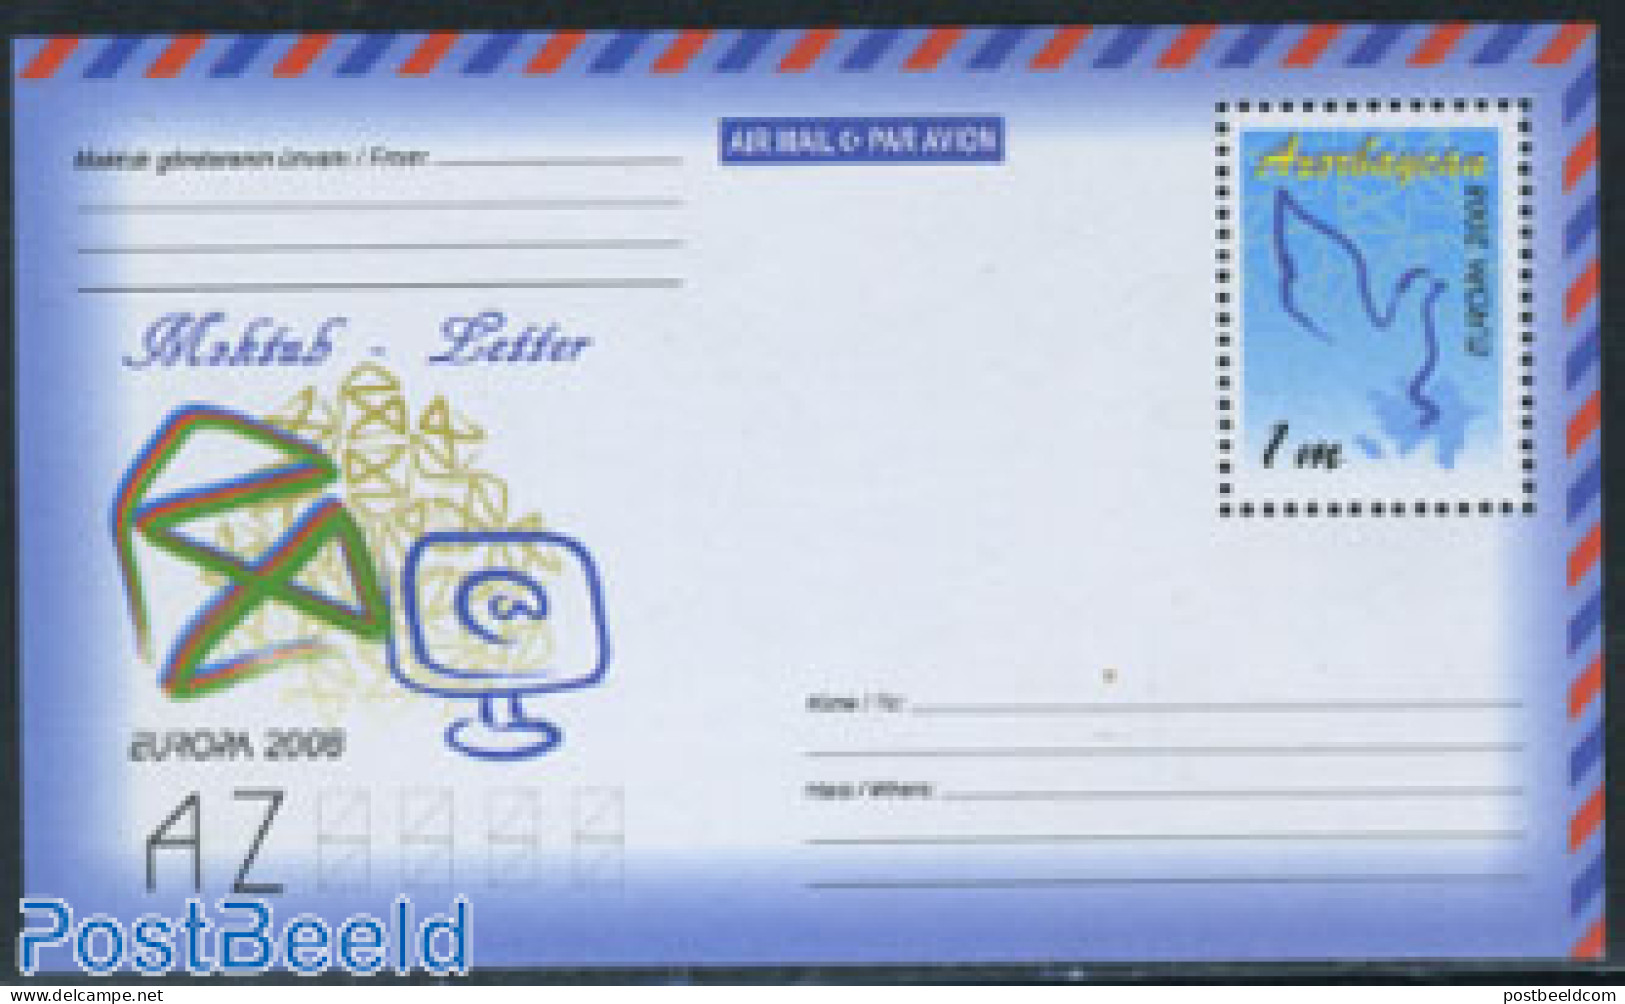 Azerbaijan 2008 Europa, Letters S/s, Mint NH, History - Europa (cept) - Post - Posta